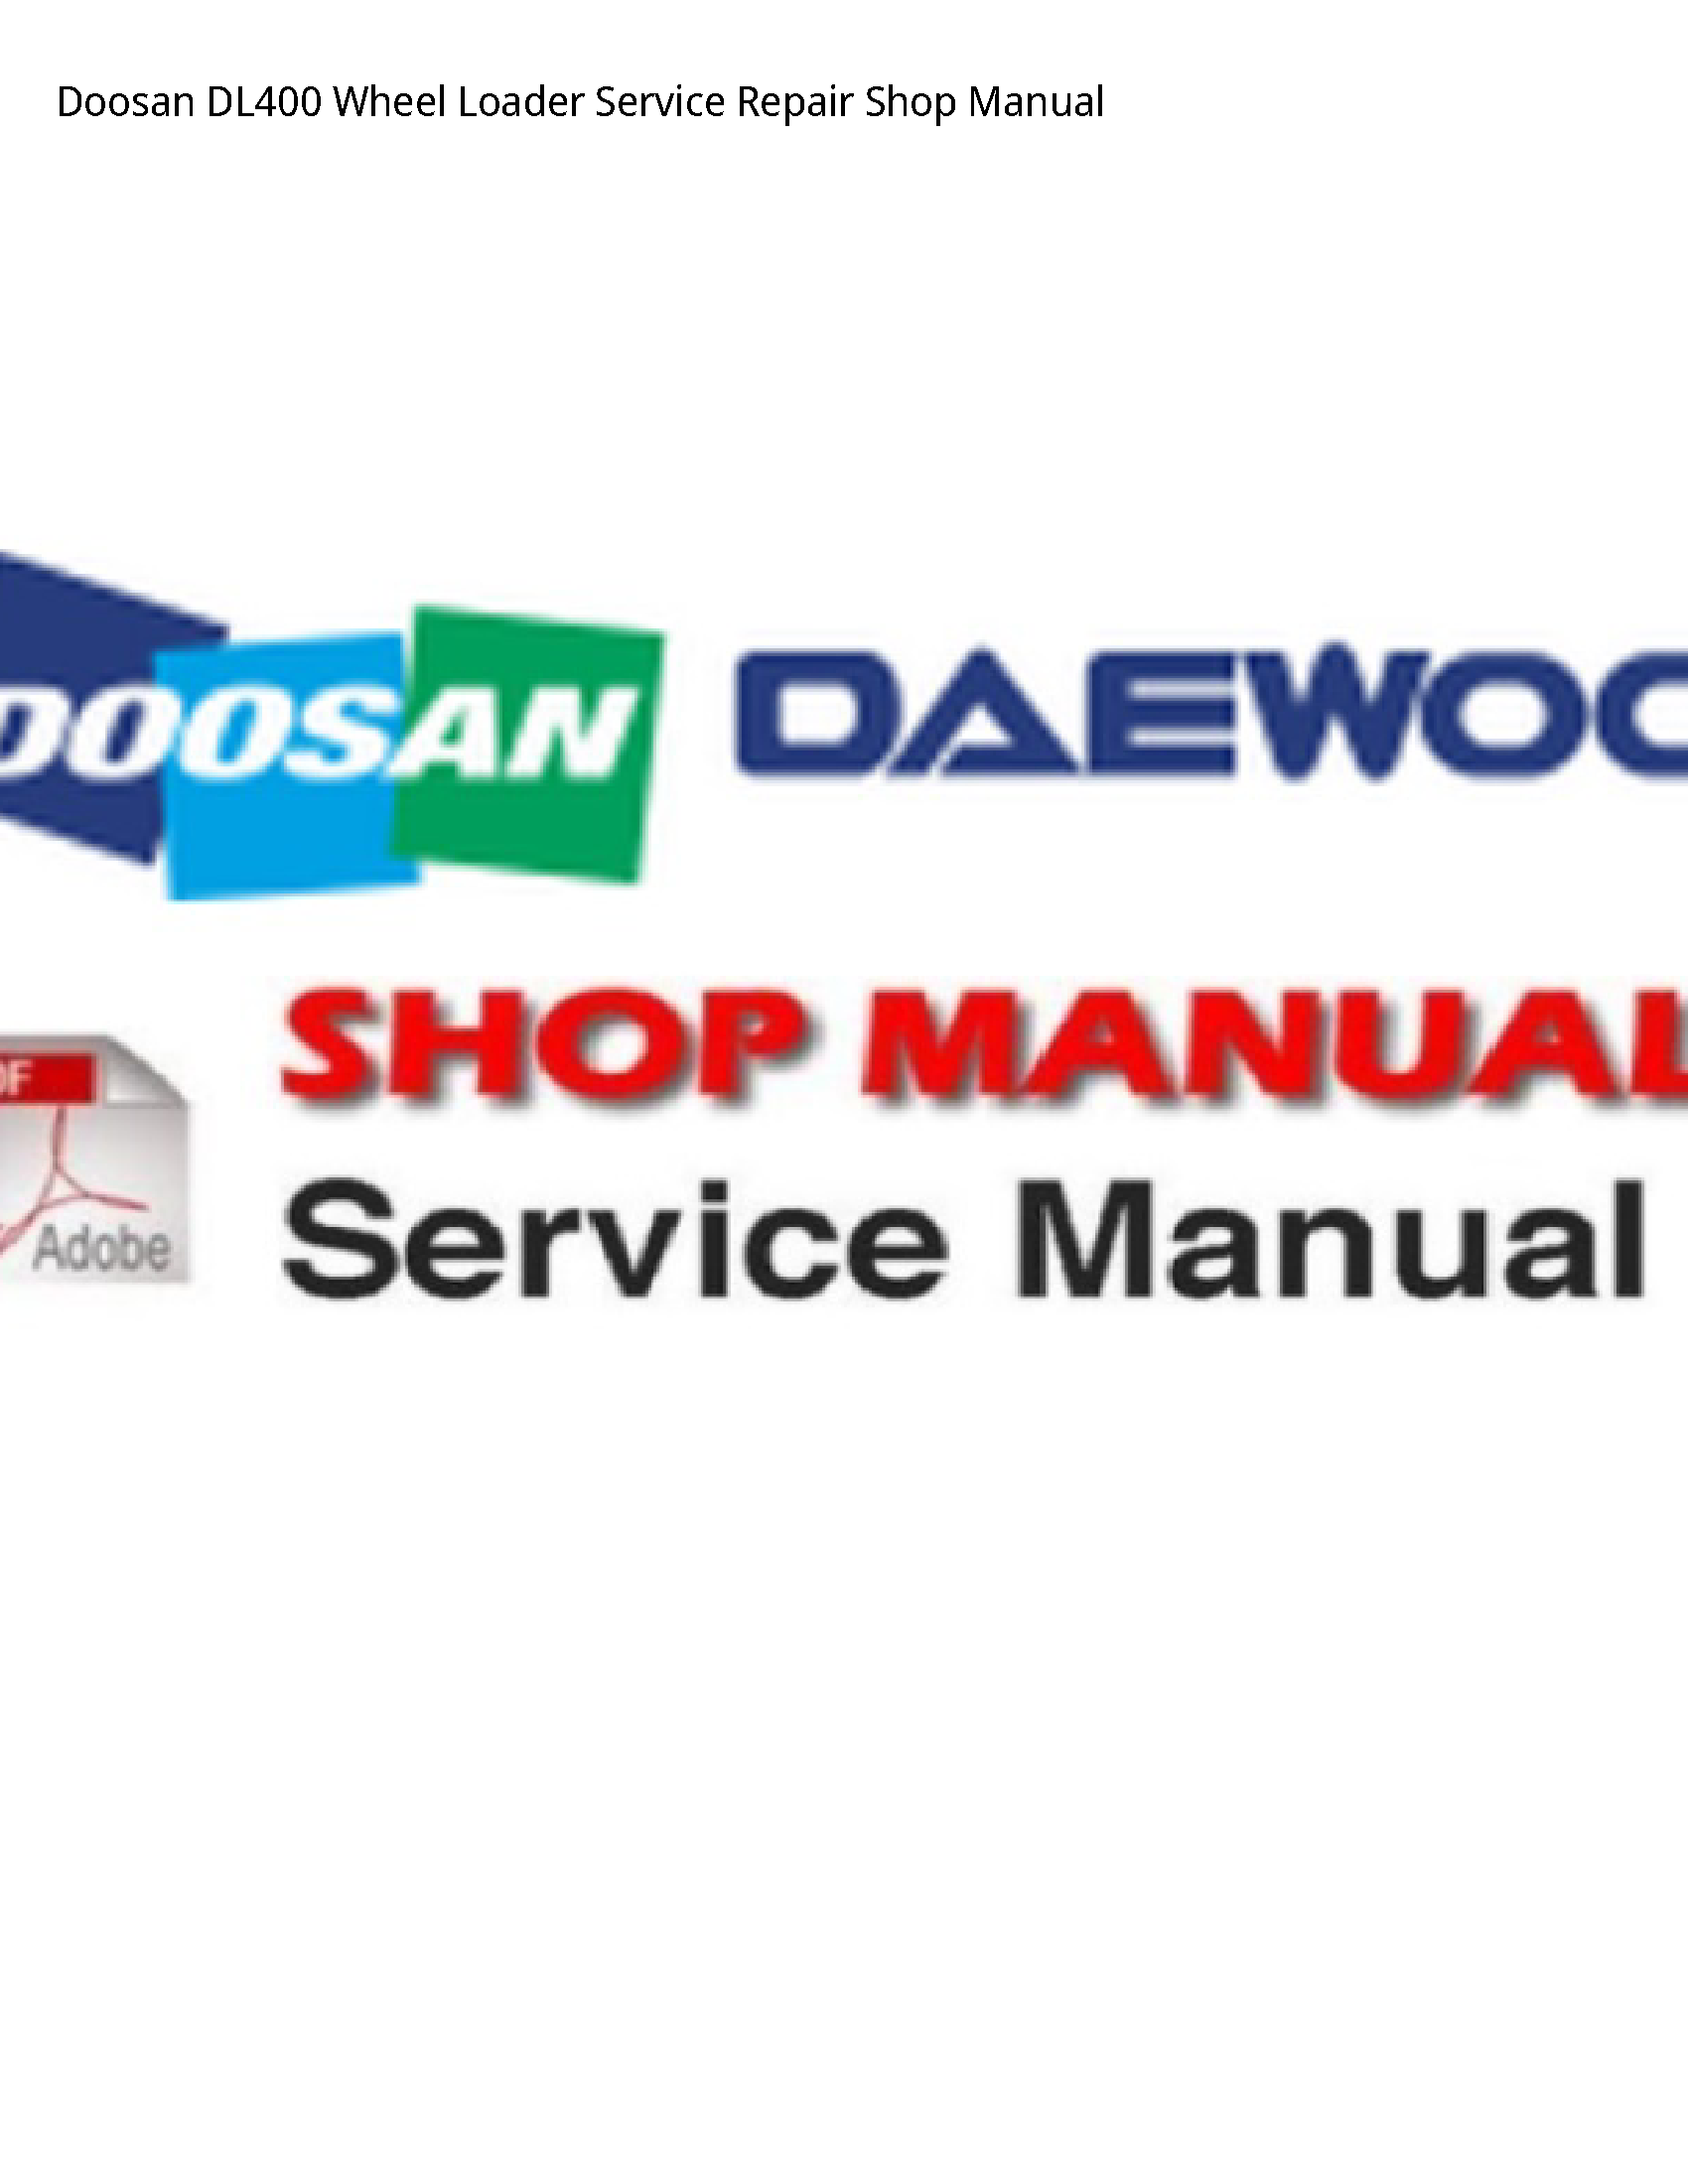 Doosan DL400 Wheel Loader manual